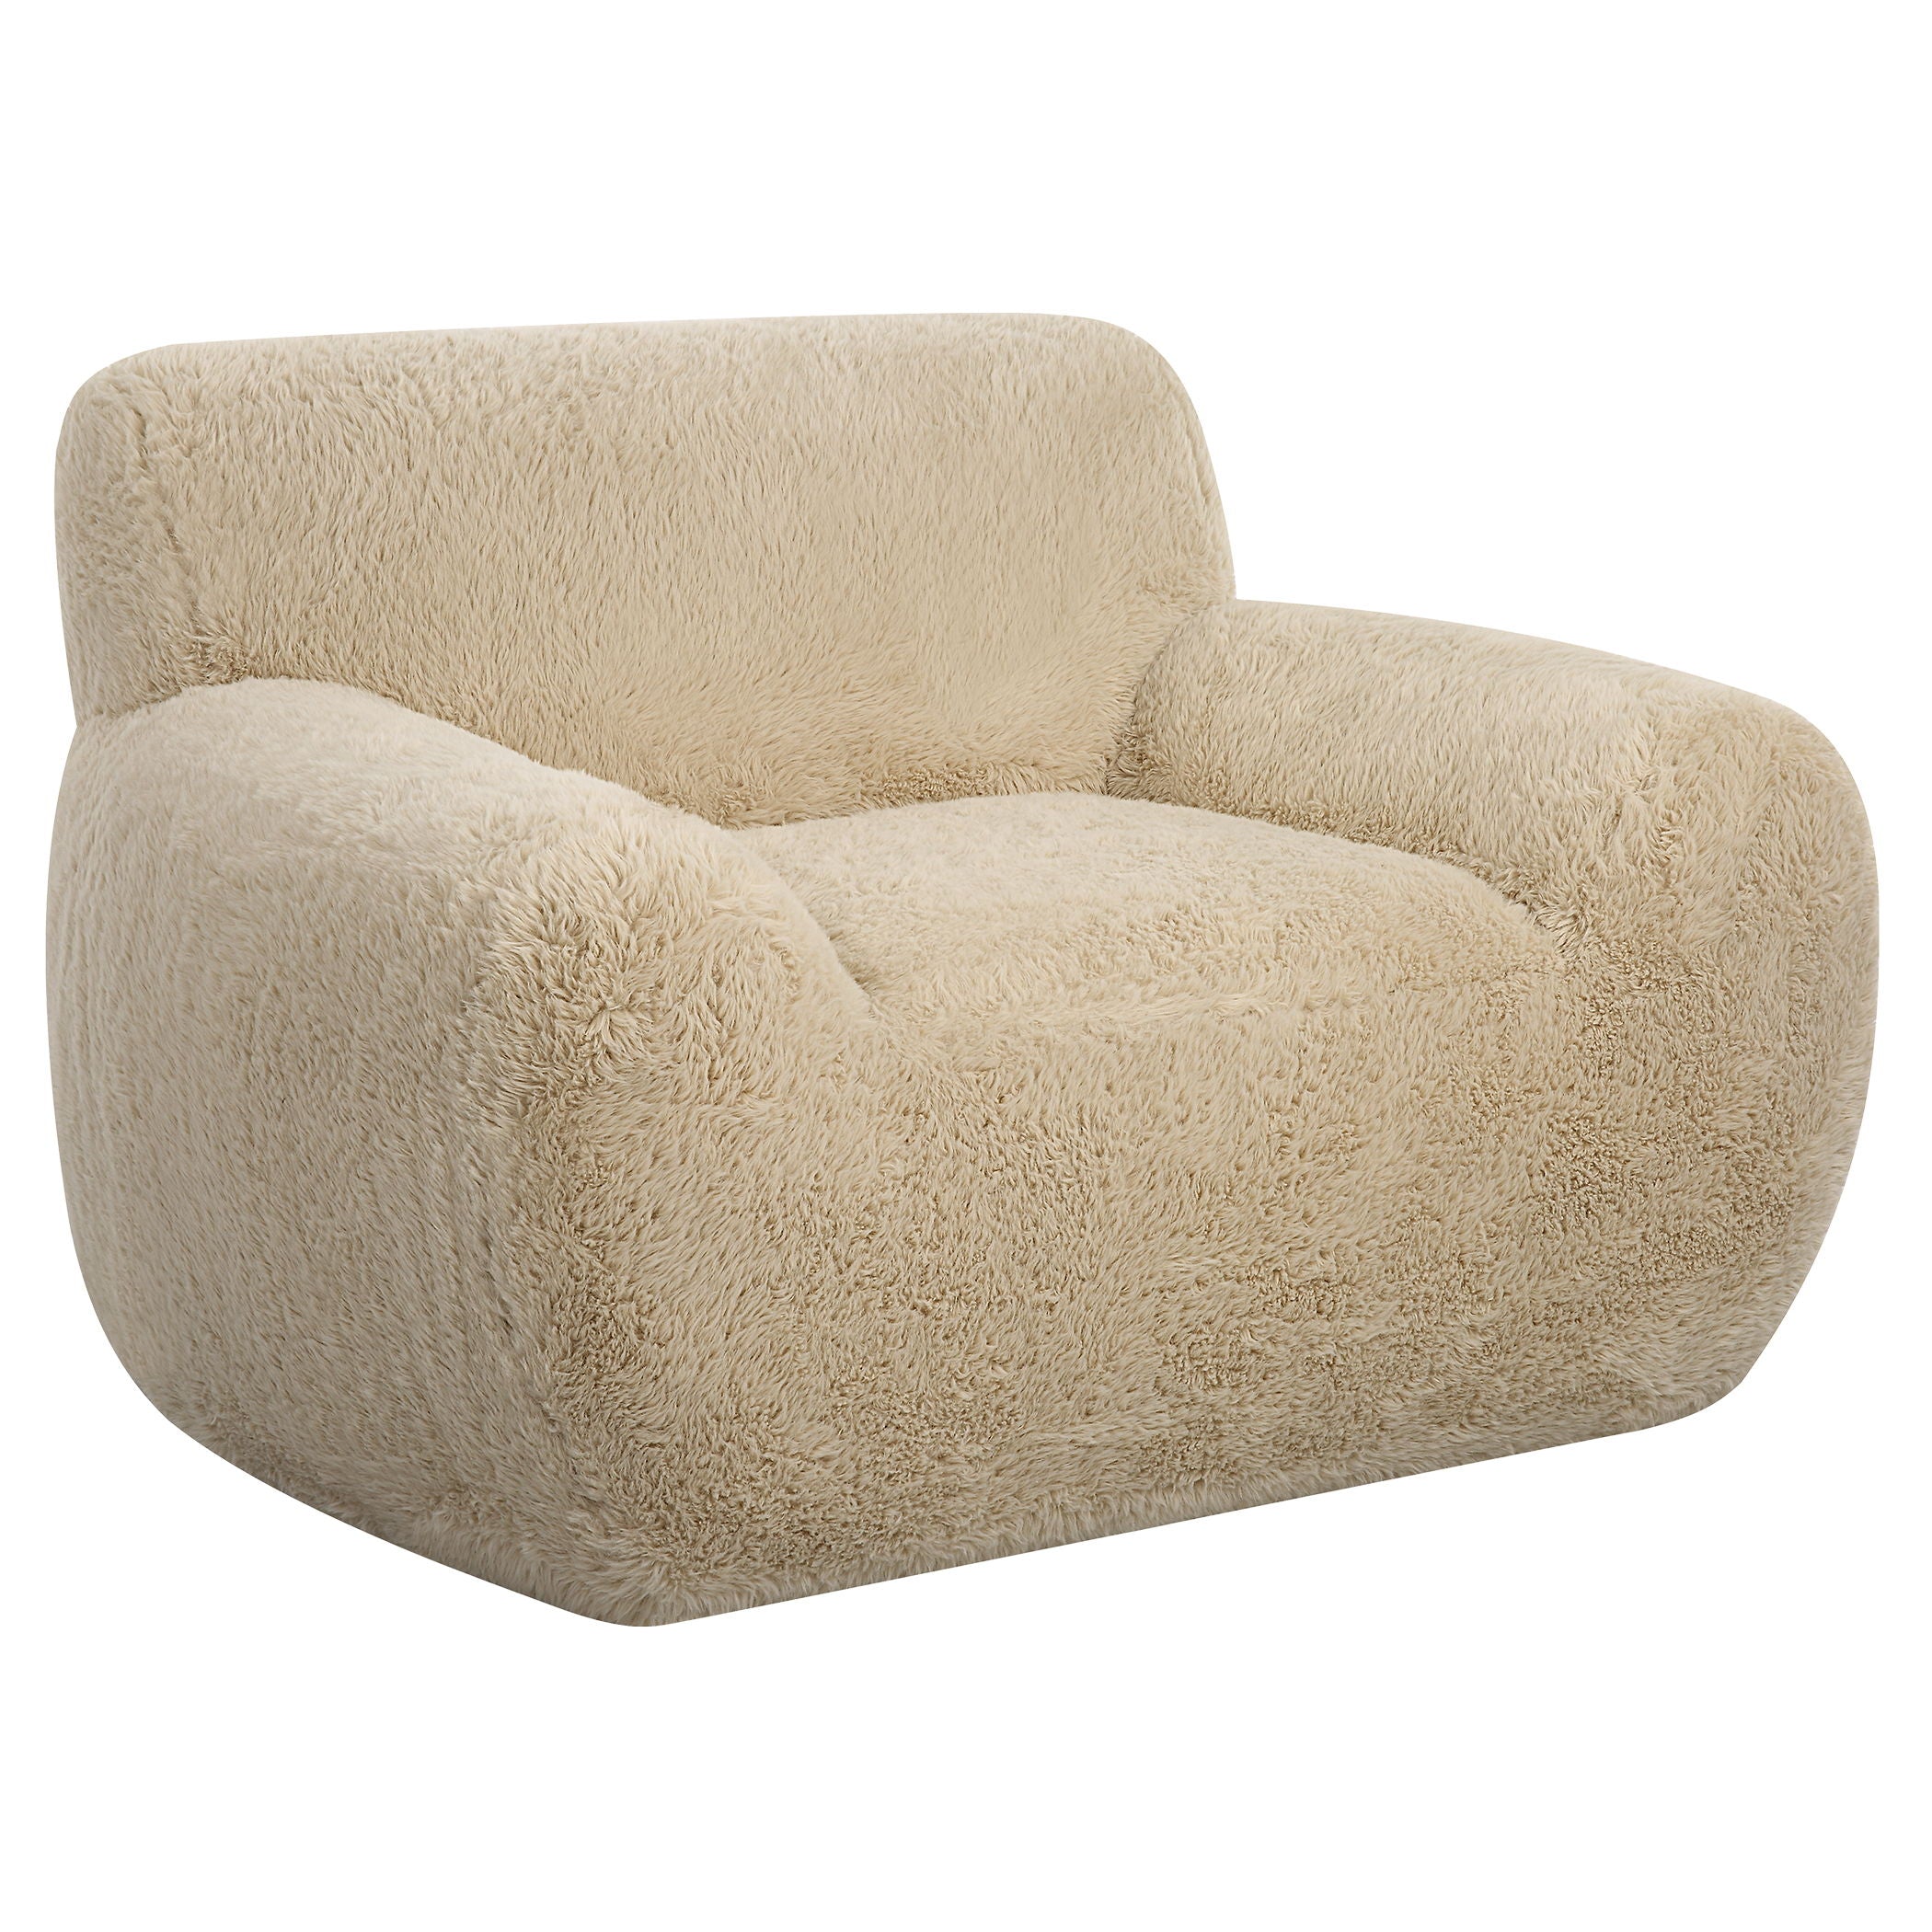 Abide - Sheepskin Accent Chair - Beige